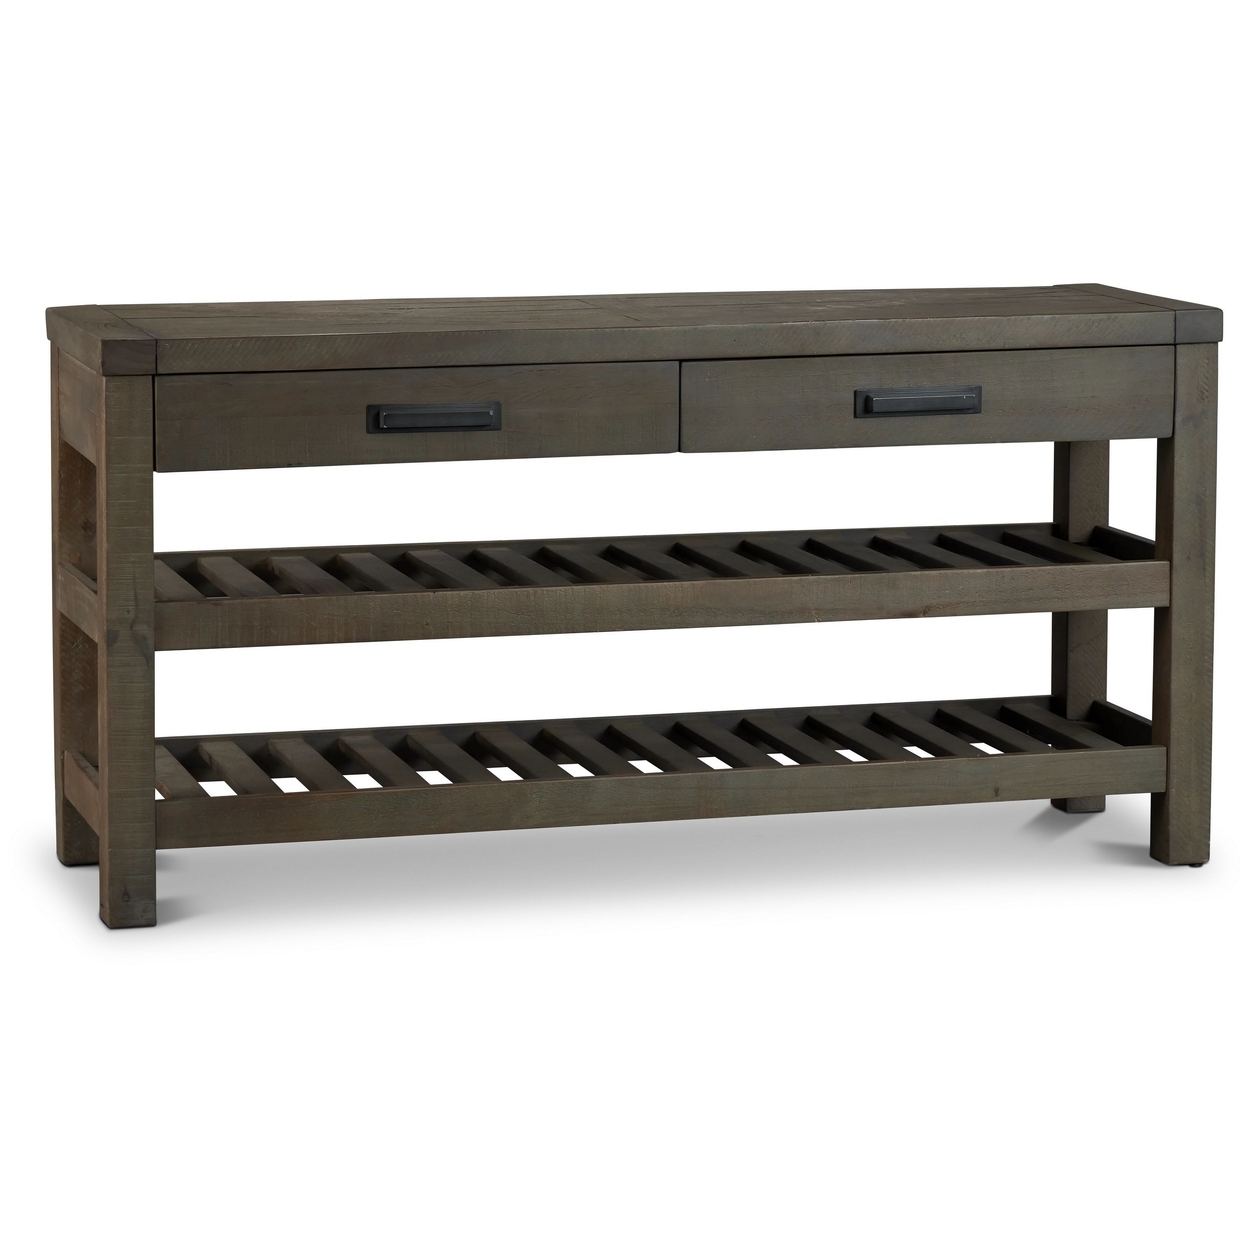 Tarn 60 Inch Console Table, 2 Drawers, 2 Open Shelves, Rustic Gray Wood -Saltoro Sherpi